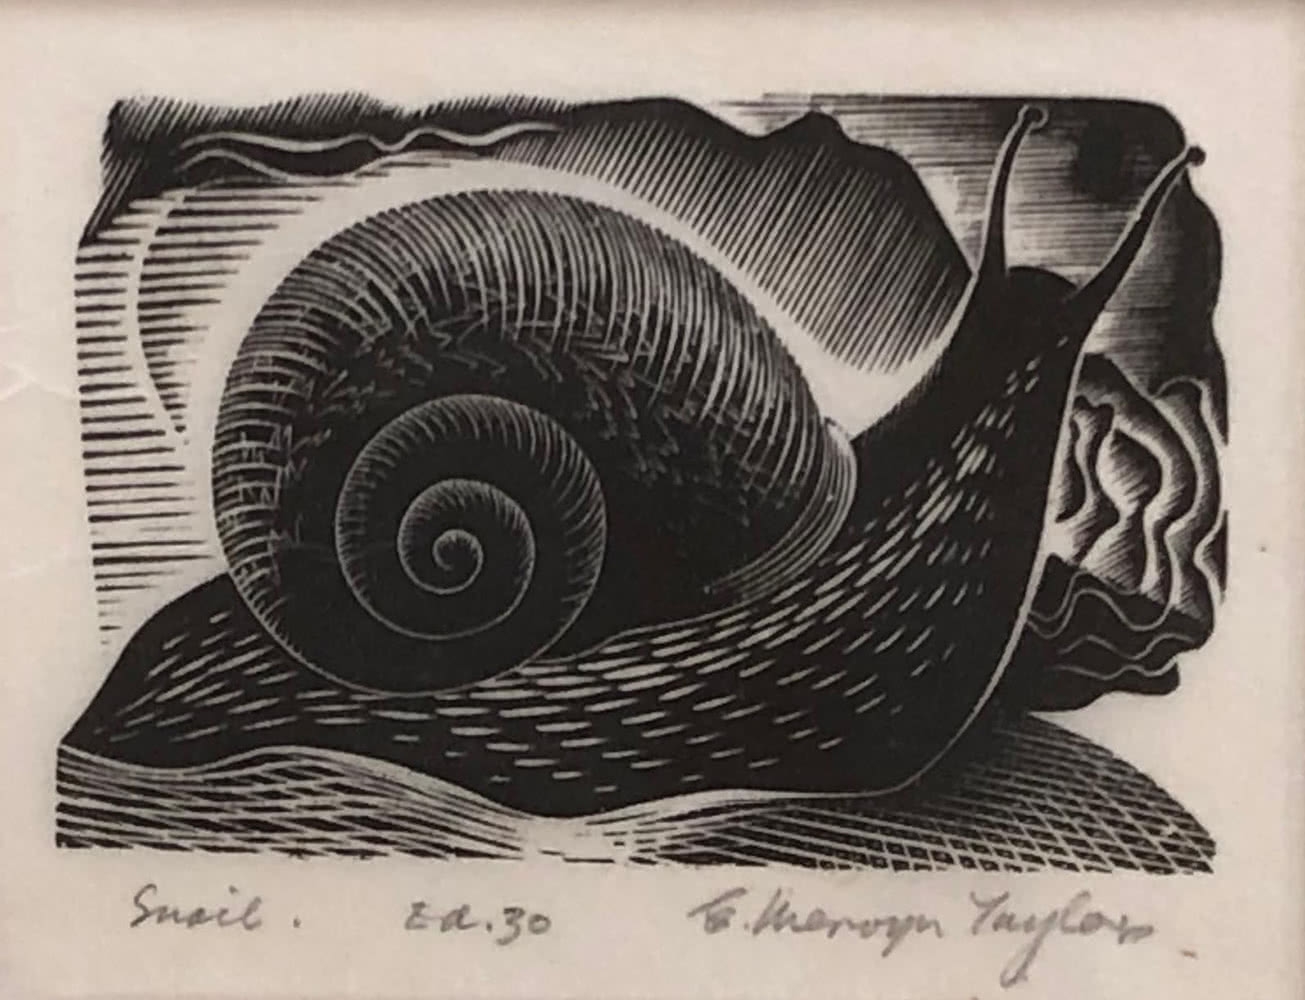 Snail by E. Mervyn Taylor